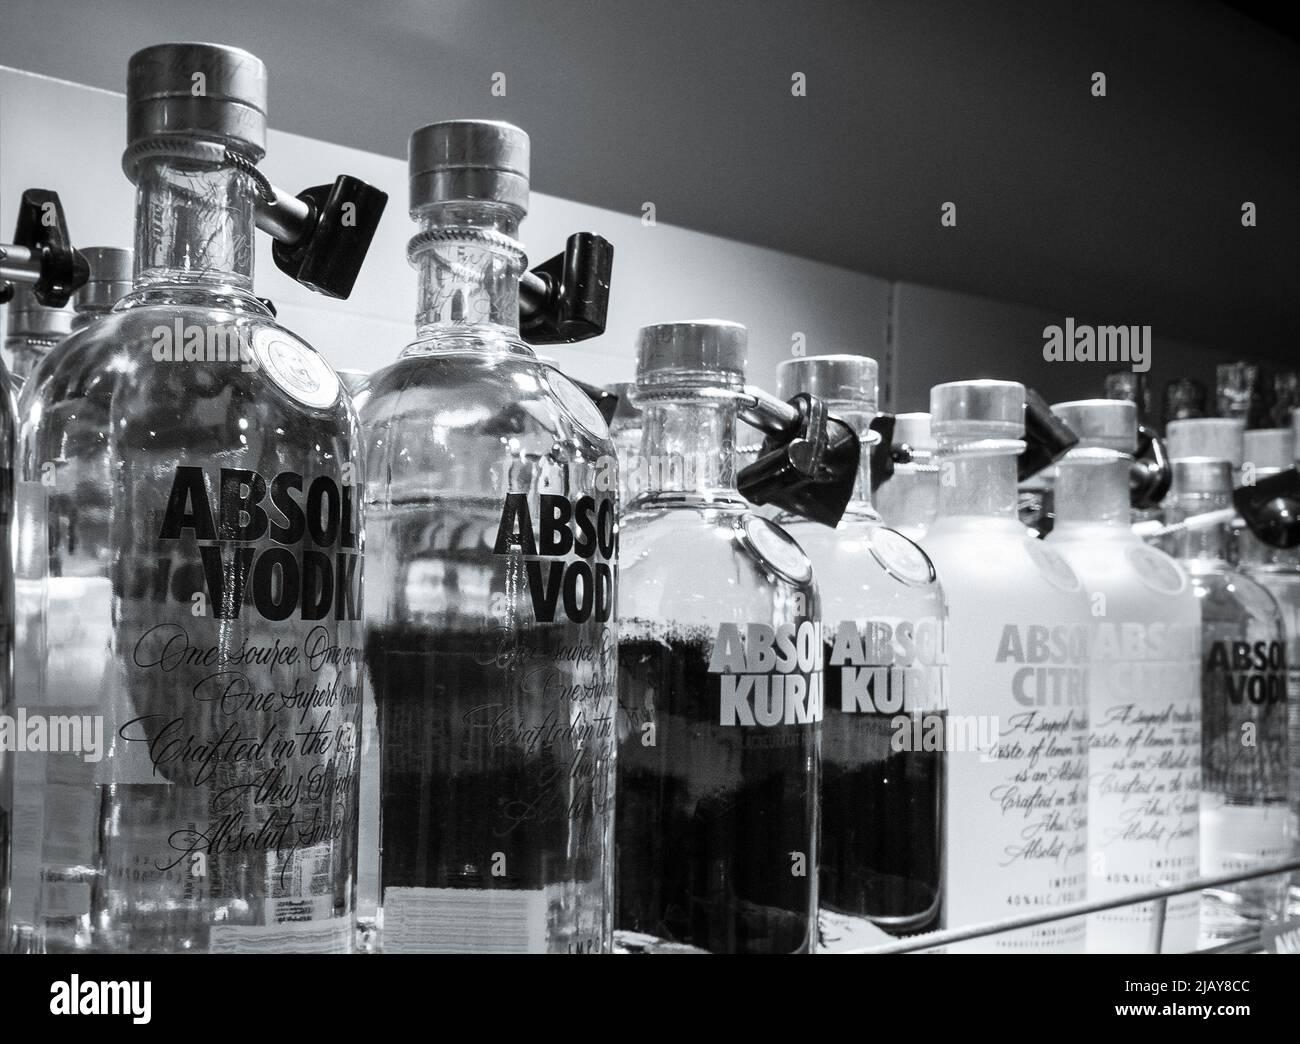 the Absolut vodka assortment stands on supermarket shelves Stock Photo